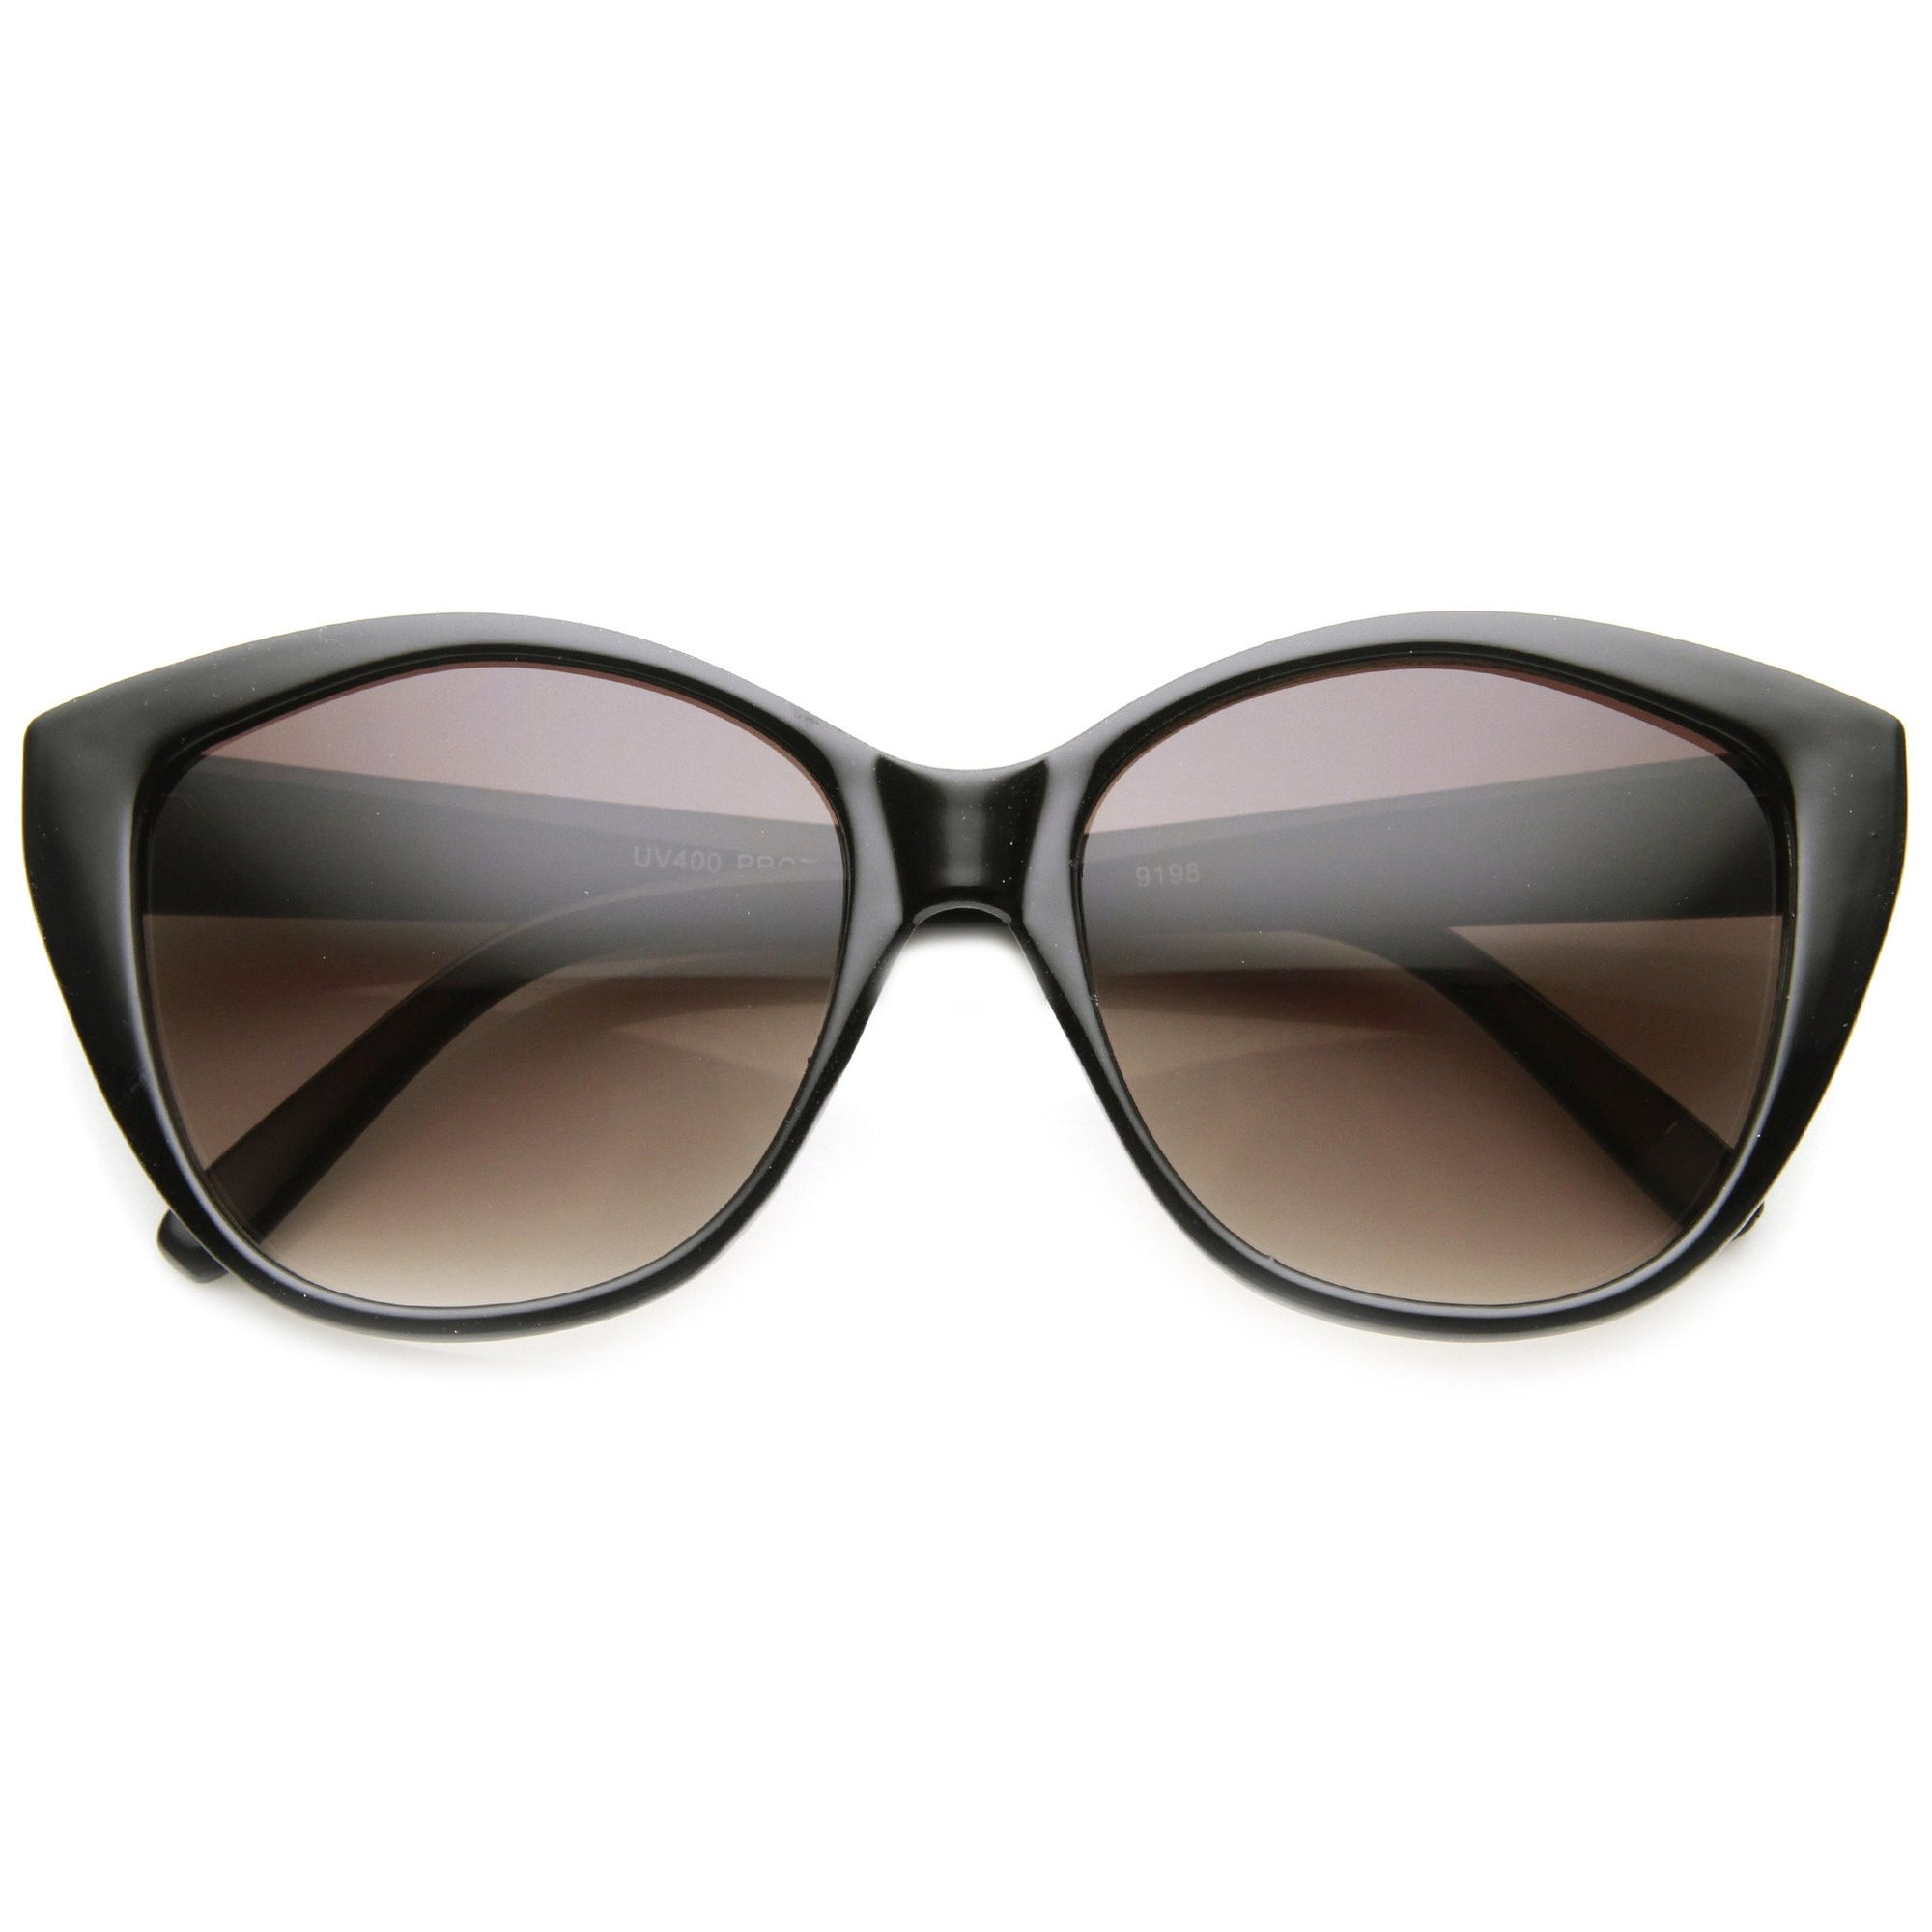 Ouwen Thick Polarized Cat Eye Sunglasses For Women,trendy Vintage